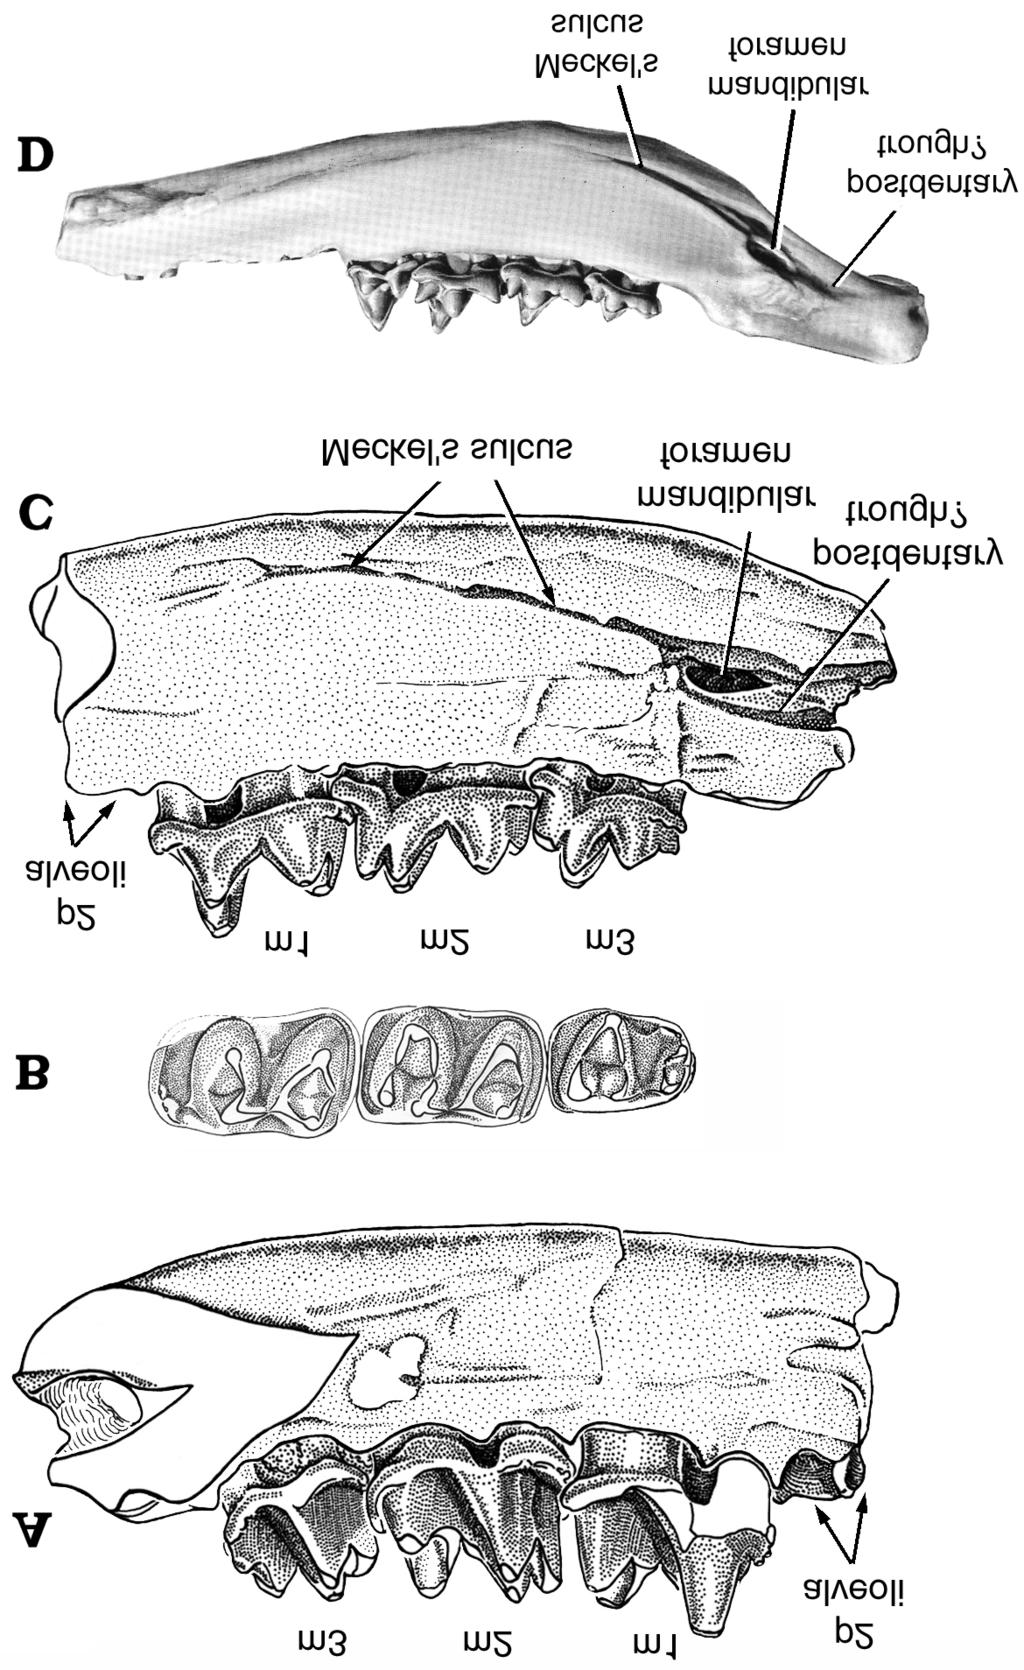 Comparison of mandibular structures among australosphenidan and boreosphenidan mammals. A C. Australosphenidans: The monotreme Tei nolophos (A), Ausktribosphenos (B). Bishops (C). D F.